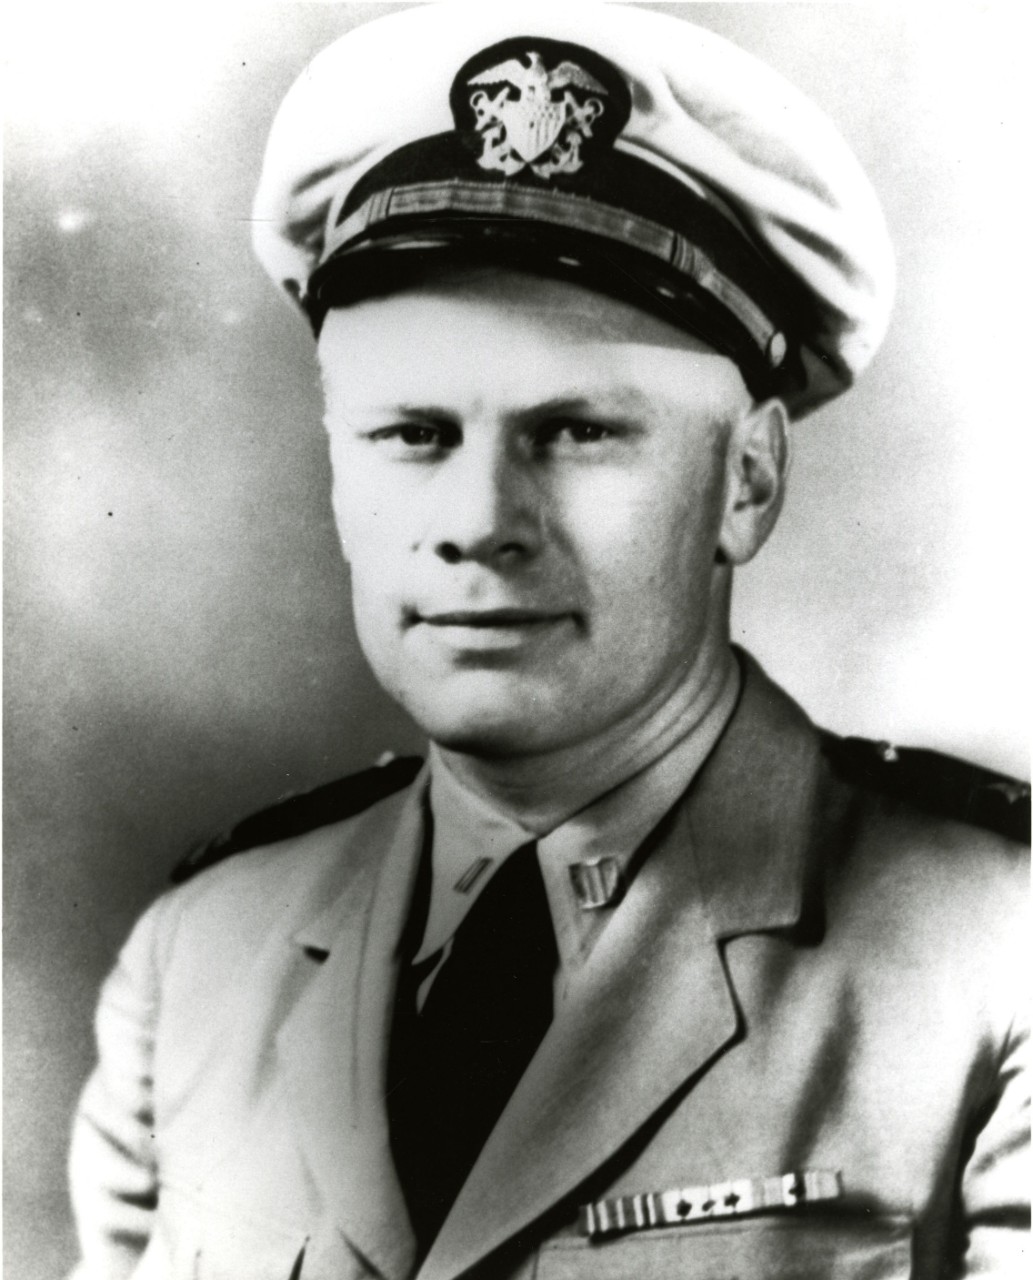 An undated file photo of U.S. Navy Lt. Gerald R. Ford taken during World War II